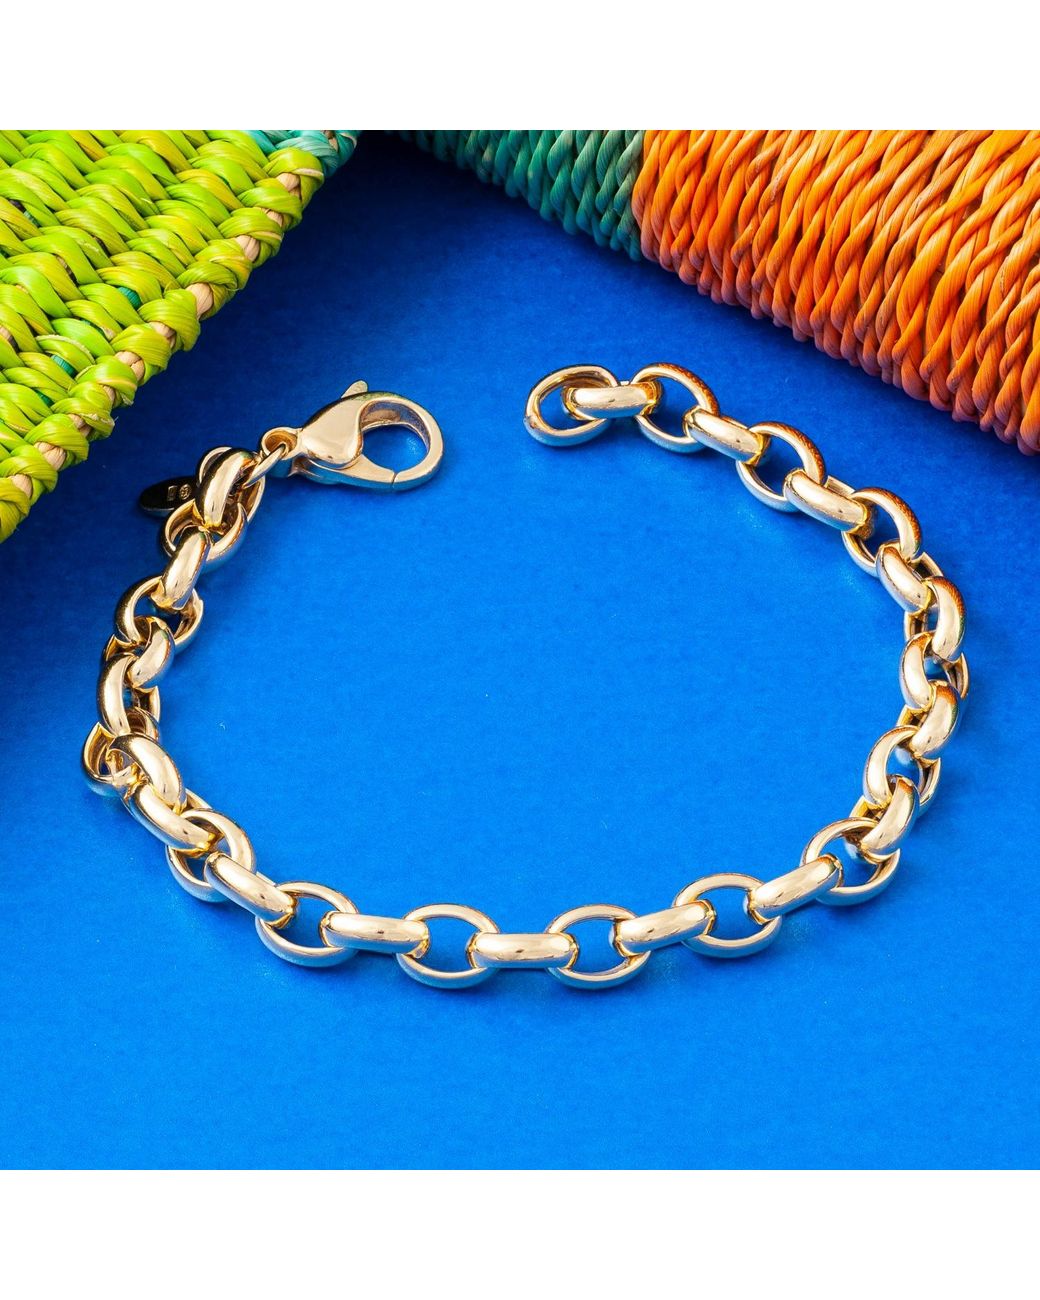 Goldcoloured steel oval belcher chain bracelet for Men with alternate  fancy links  Laval Europe